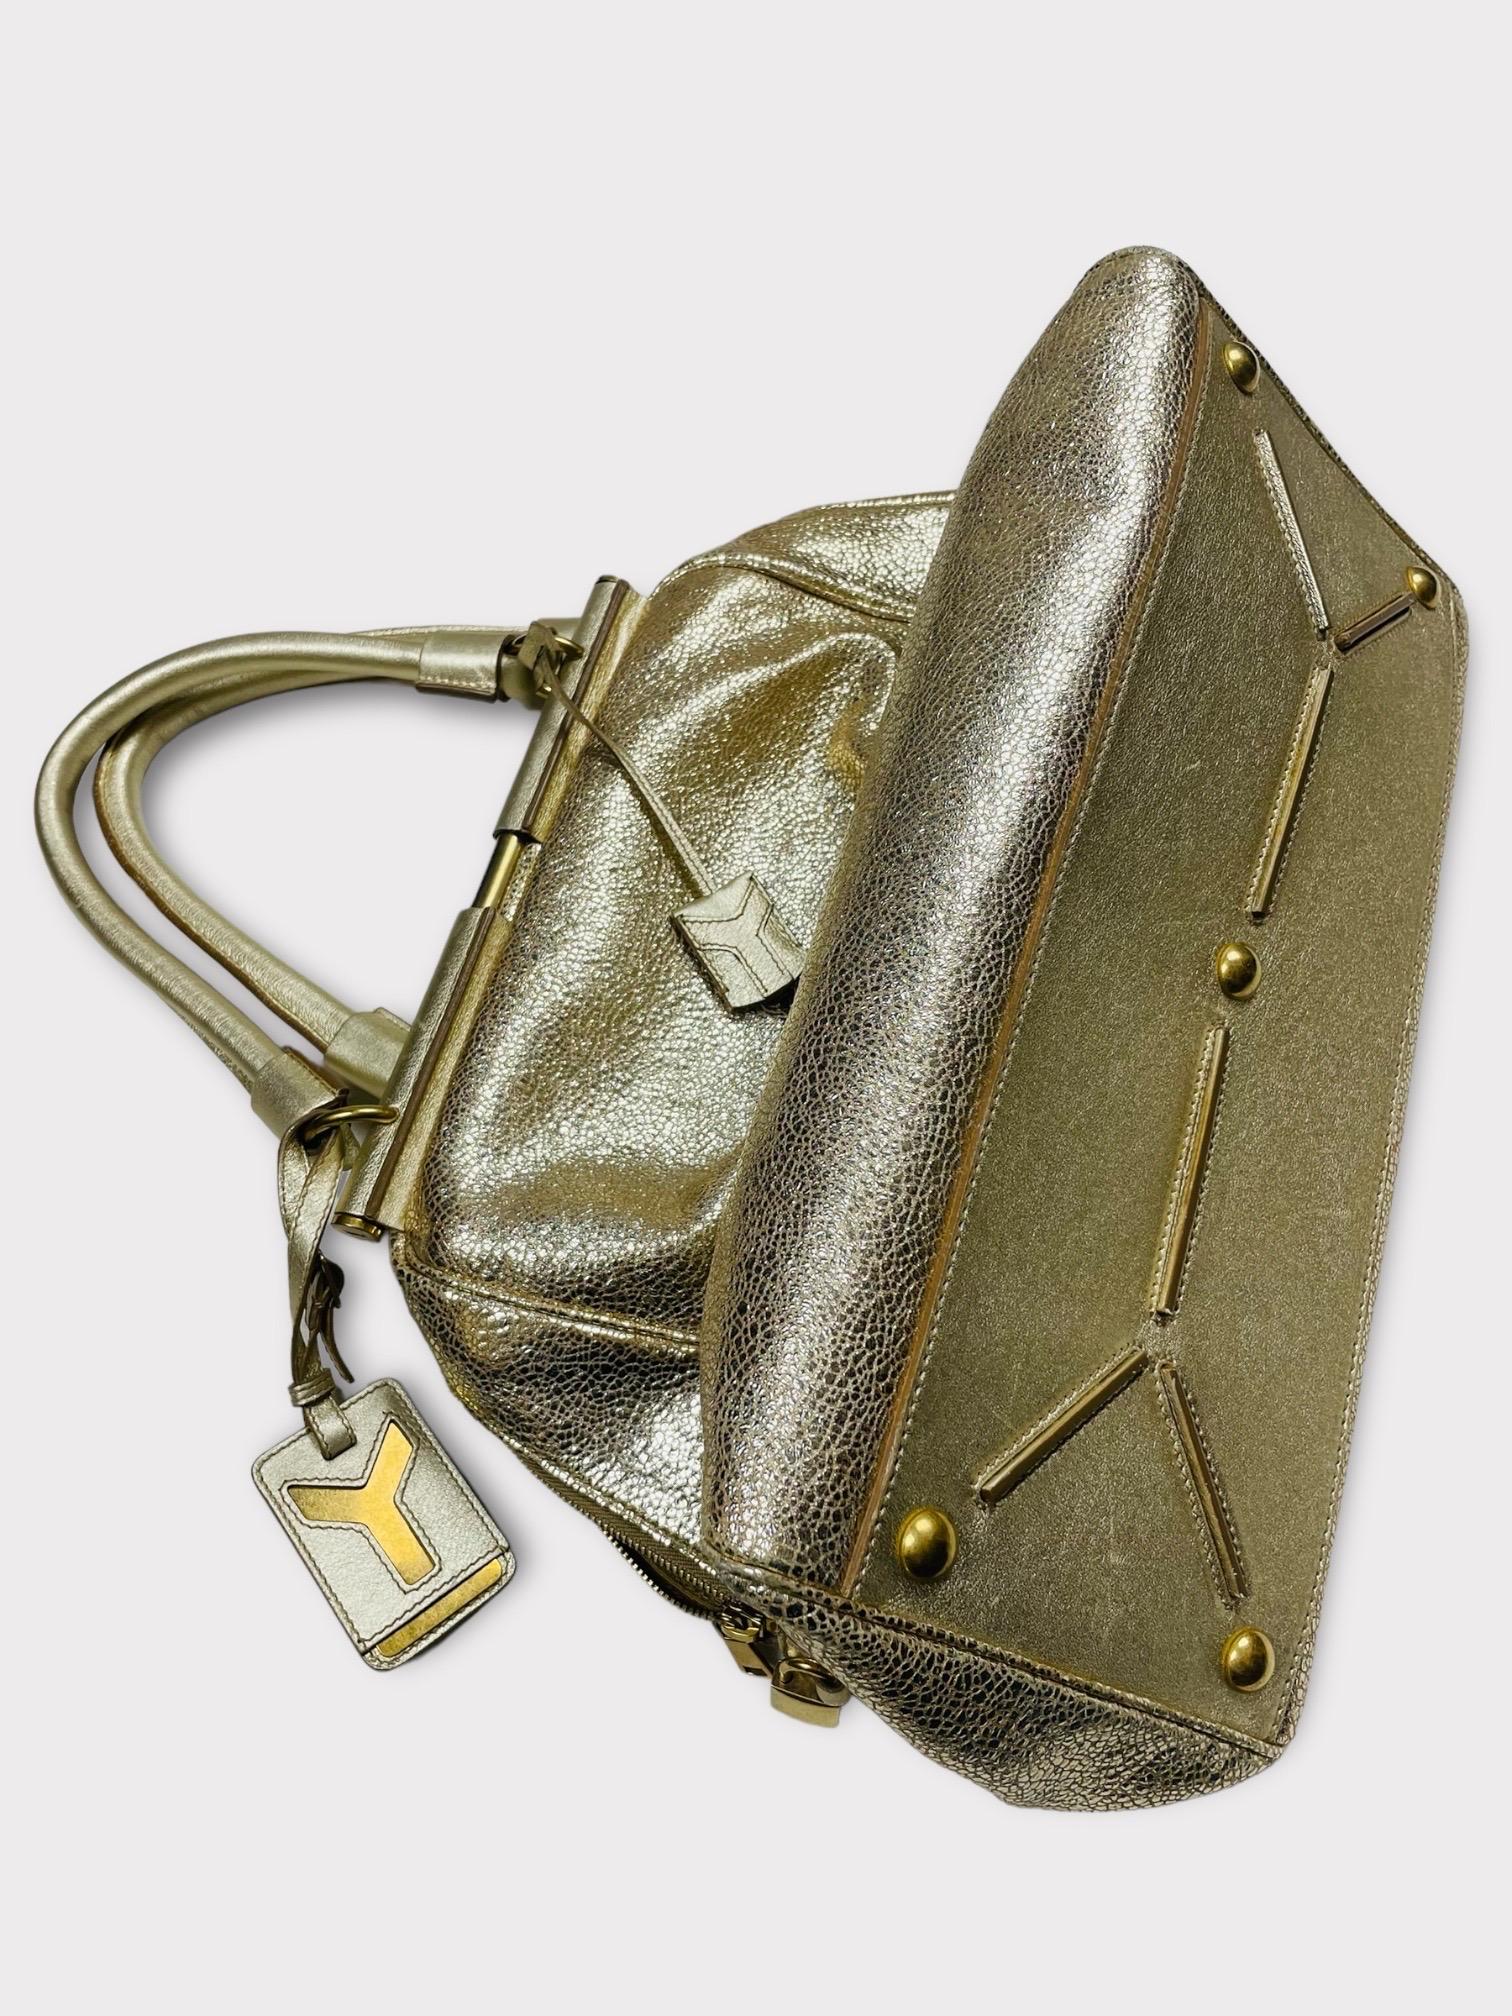 Saint Laurent Rive Gauche Metallic Gold Leather Medium Majorelle Tote Bag In Good Condition For Sale In Genève, CH